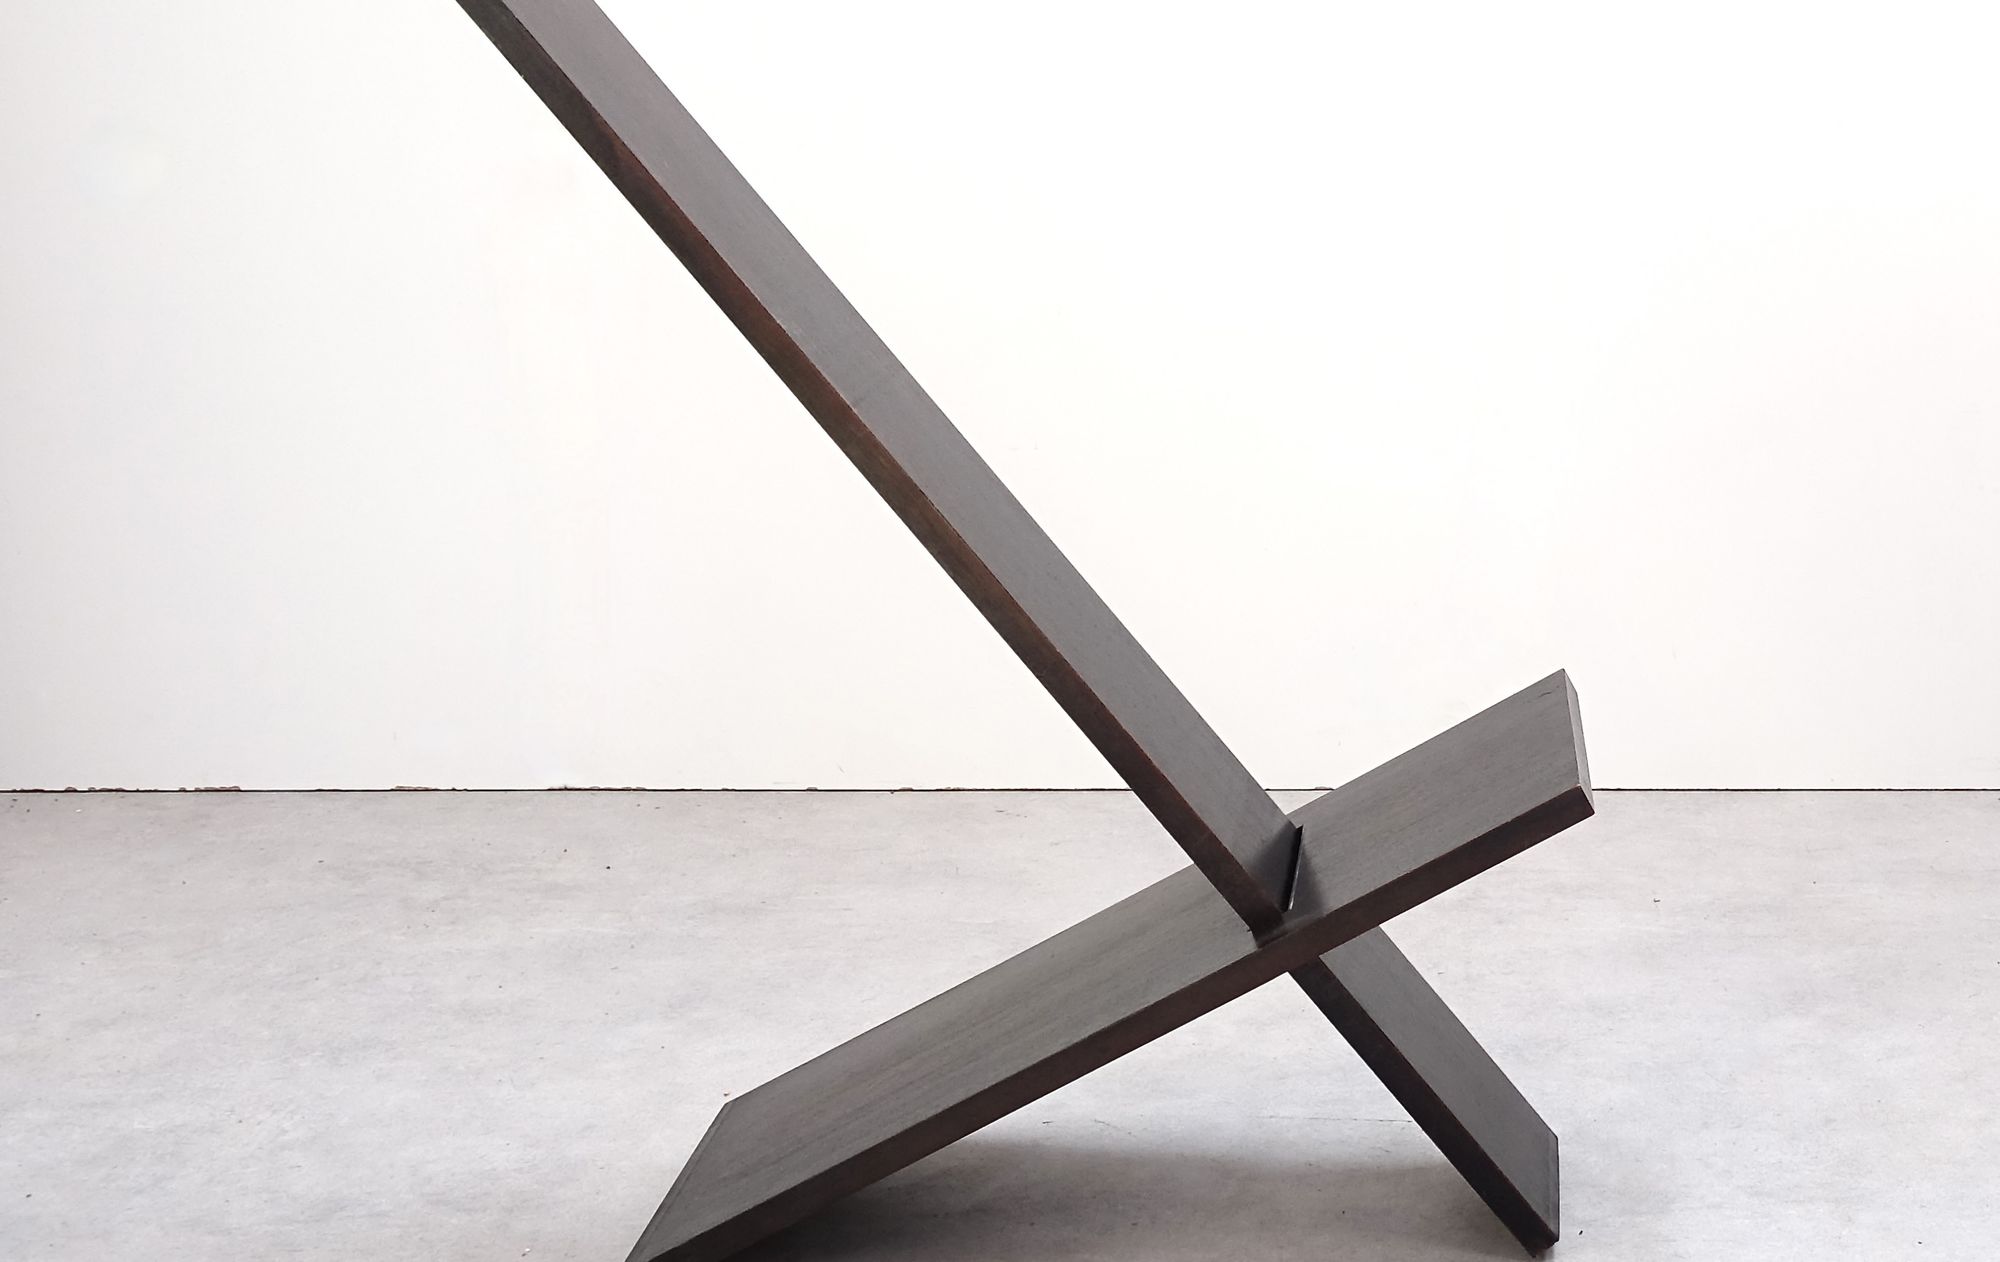 Minimalist chair by English designer De Graaff